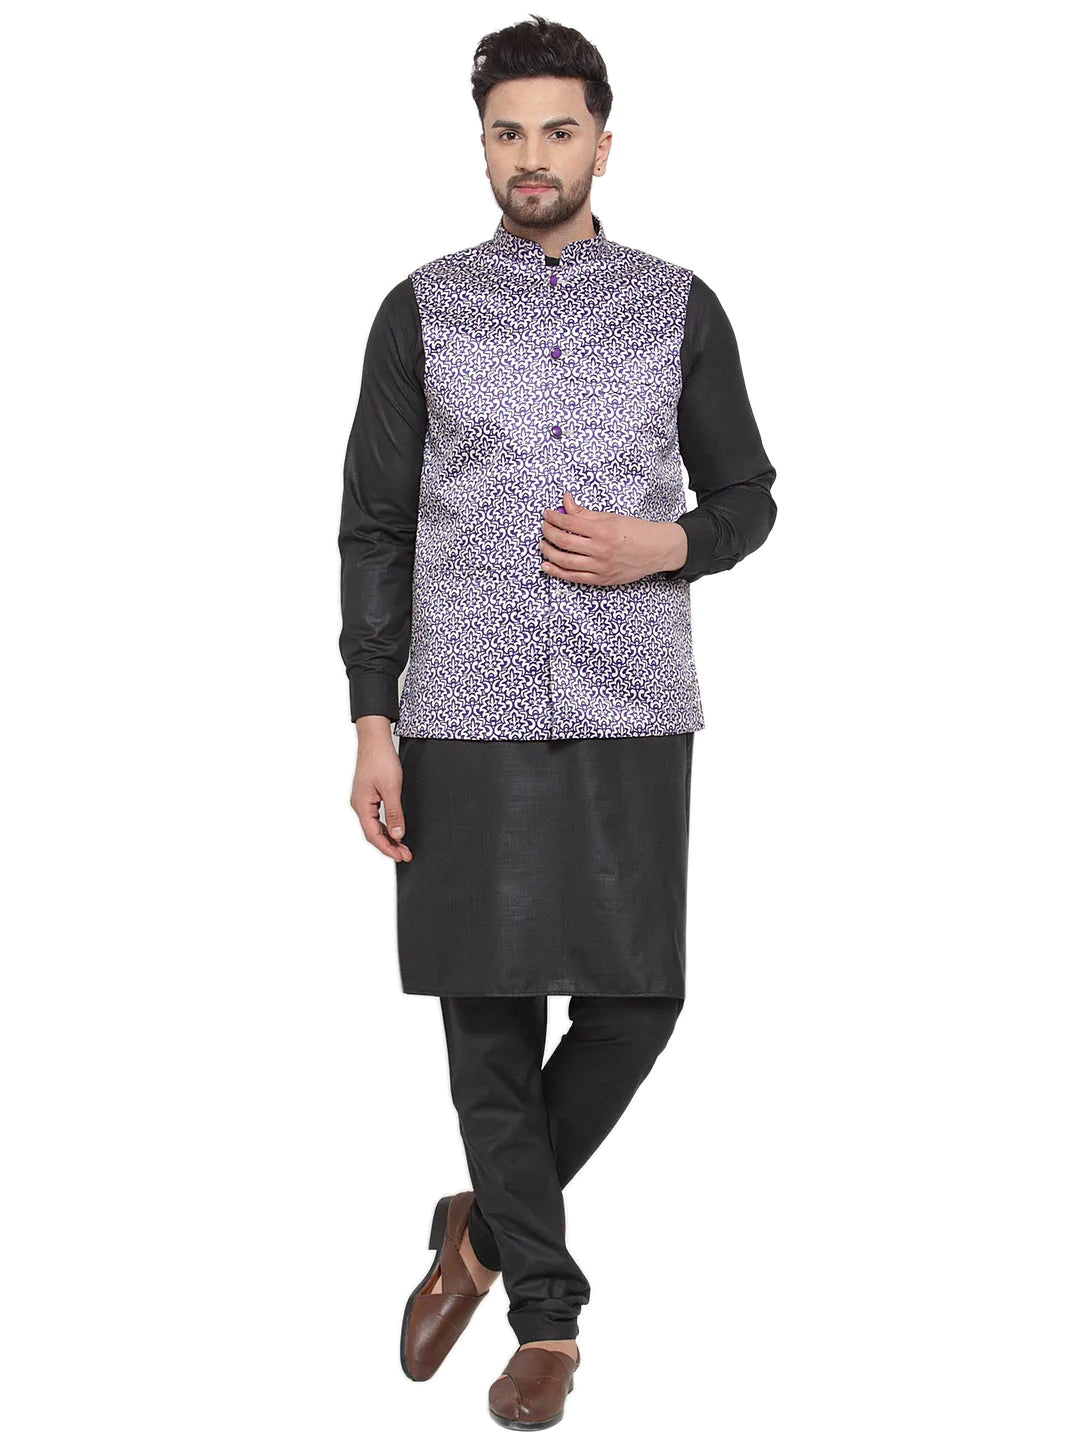 Jompers Men's Solid Cotton Kurta Pajama with Printed Waistcoat ( JOKP WC 4061 Purple-B )